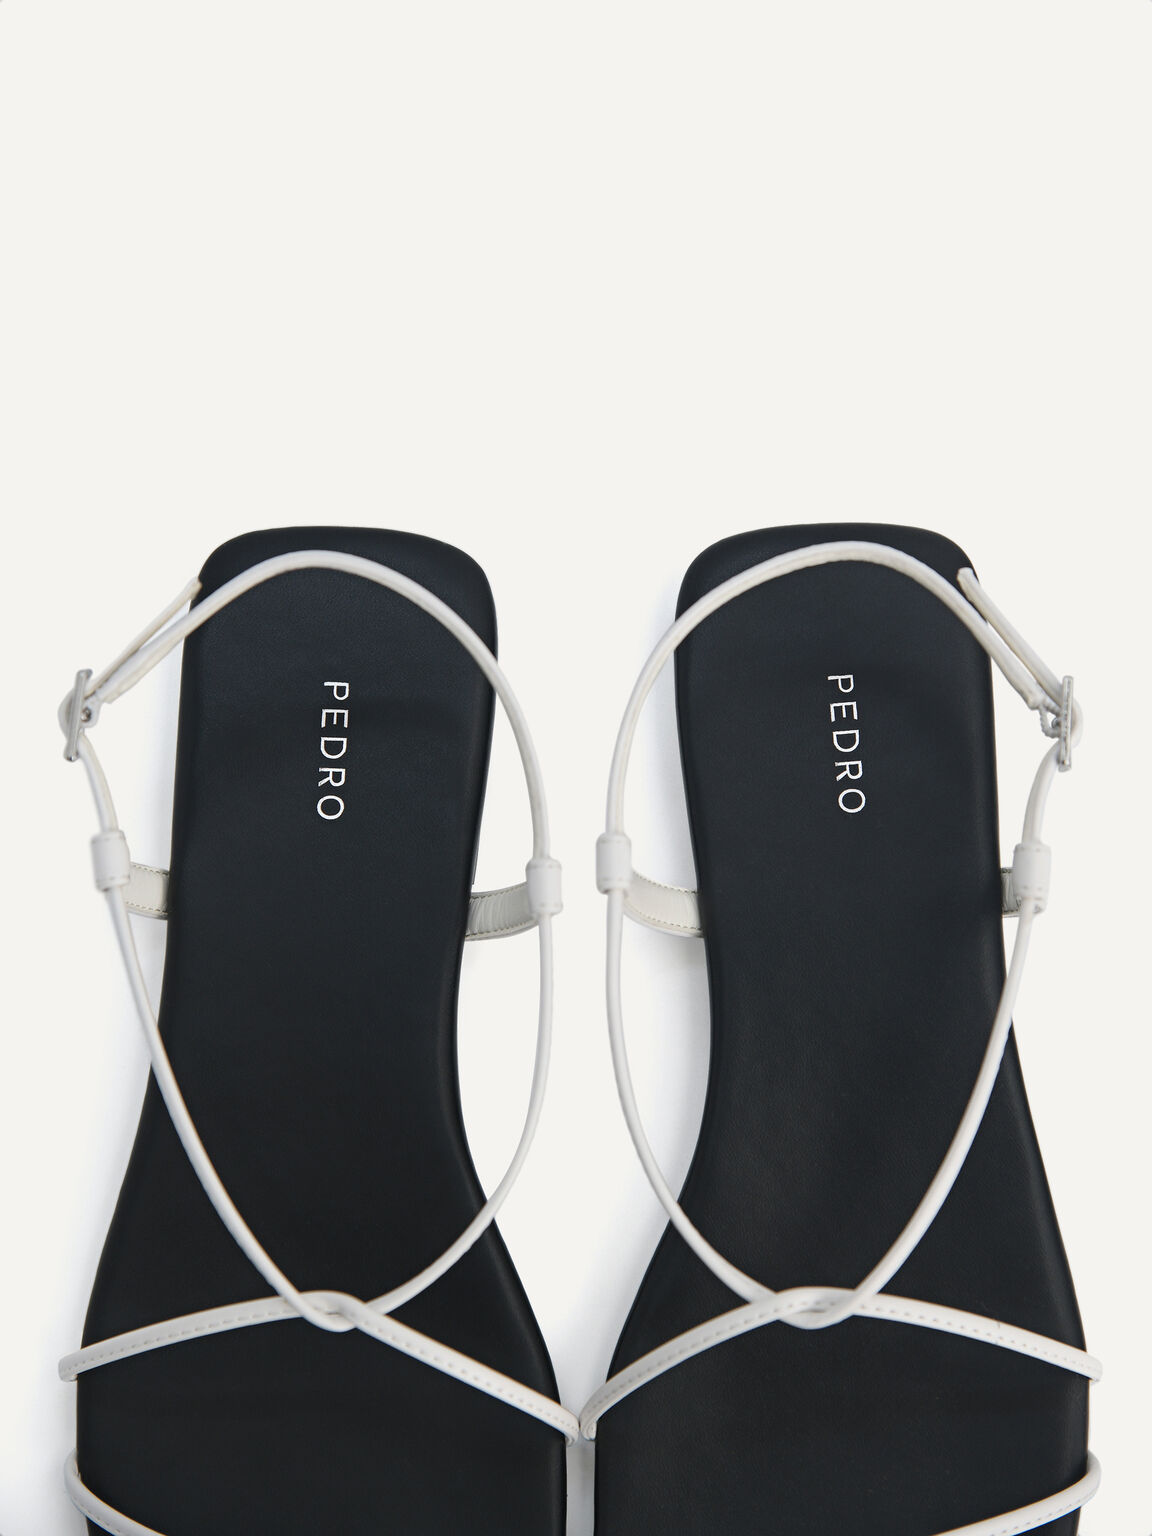 Criss Cross Toe Loop Sandals, White